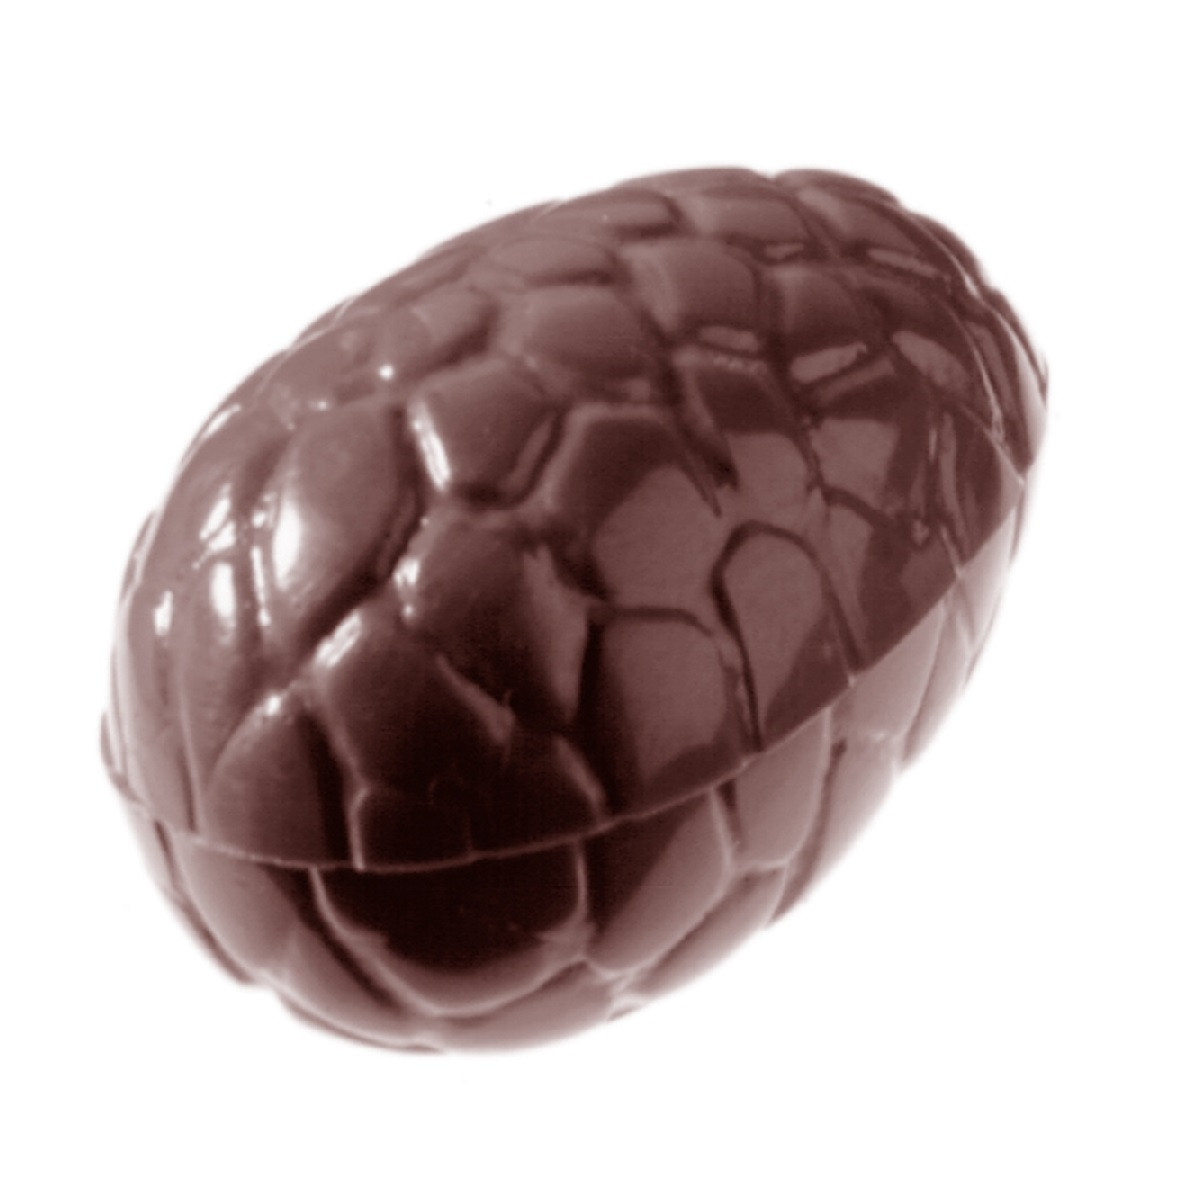 Bonbon mould Chocolate World Egg Kroko (35x) 29x21x10mm